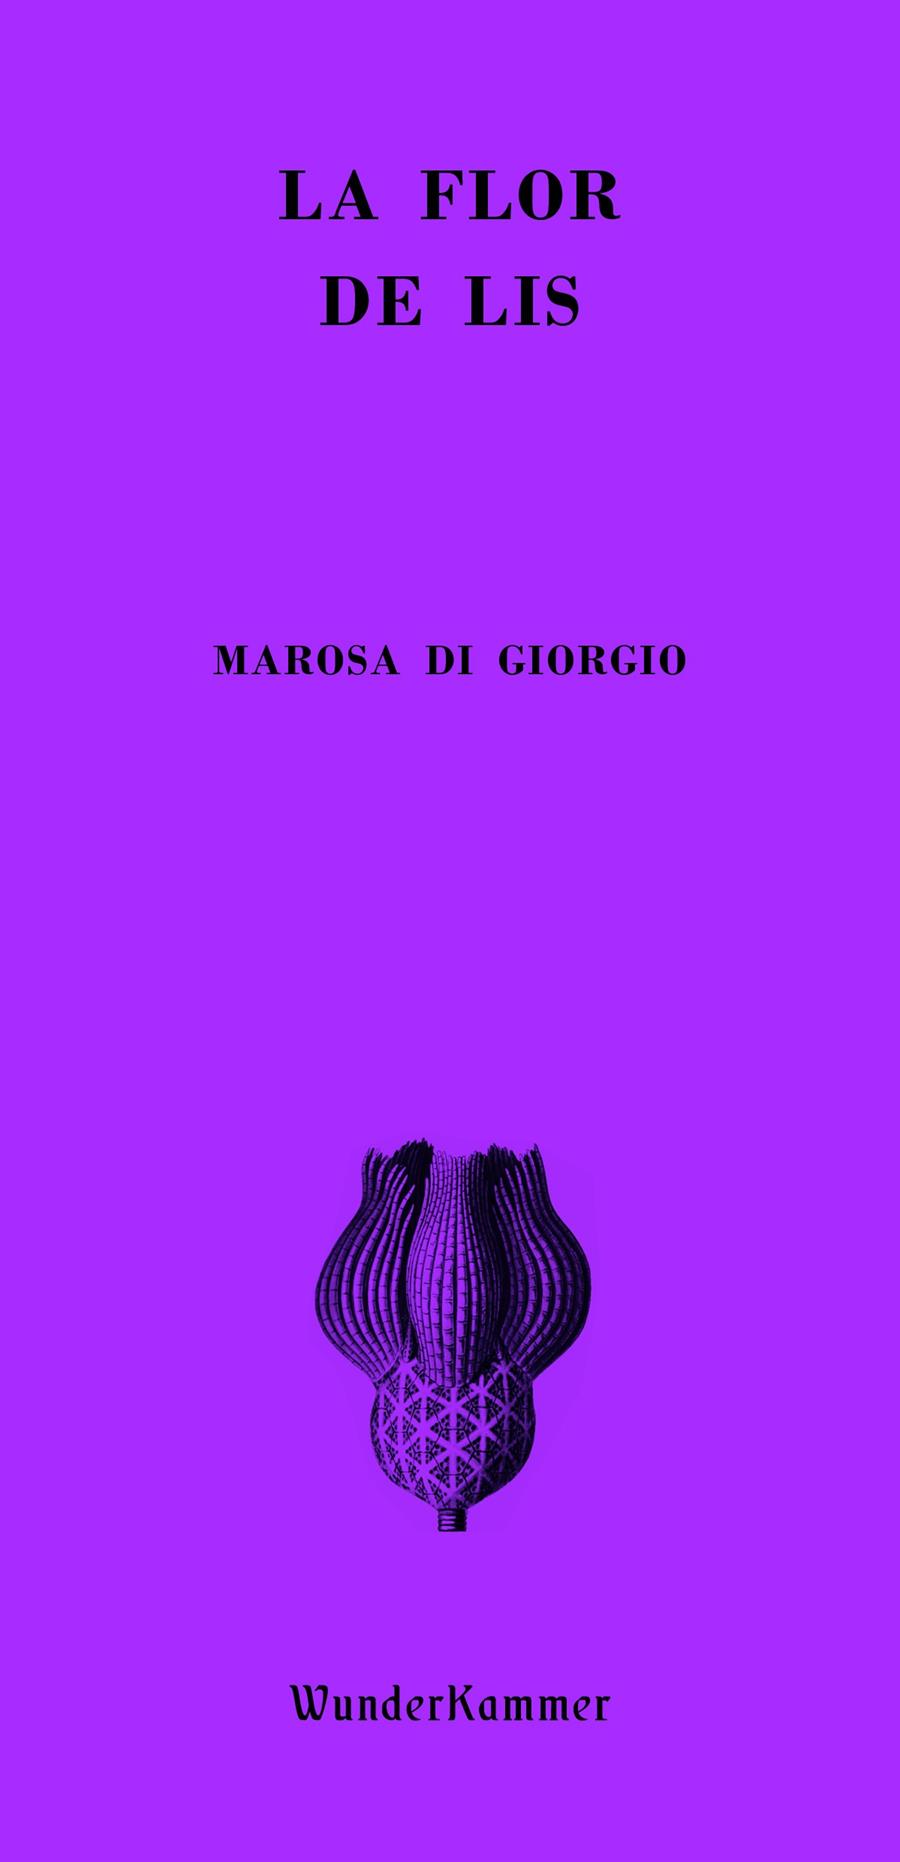 La flor de lis | Di Giorgio, Marosa | Cooperativa autogestionària